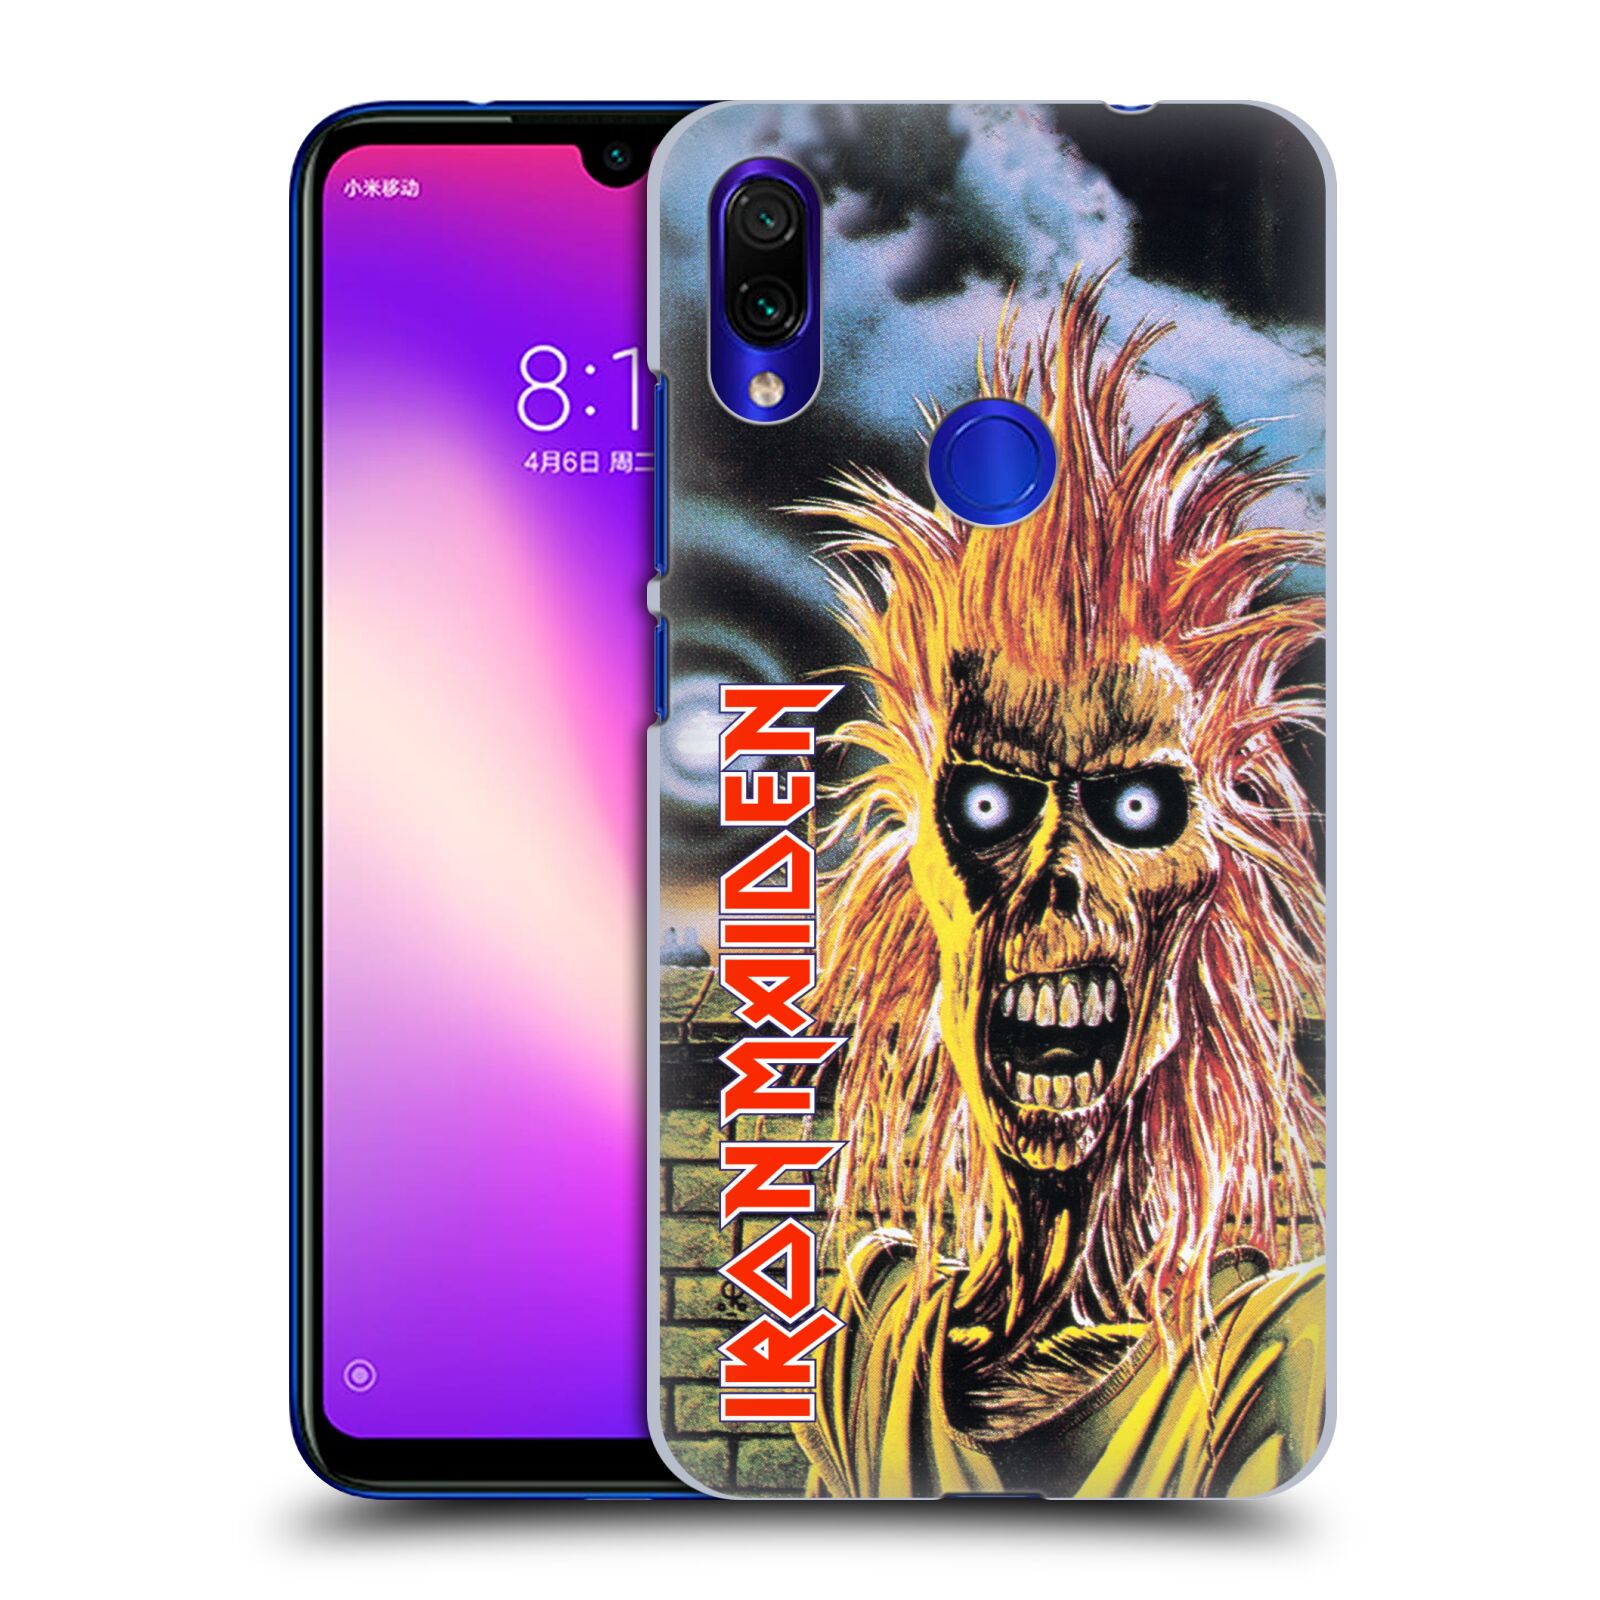 Pouzdro na mobil Xiaomi Redmi Note 7 - Head Case - Heavymetalová skupina Iron Maiden punker